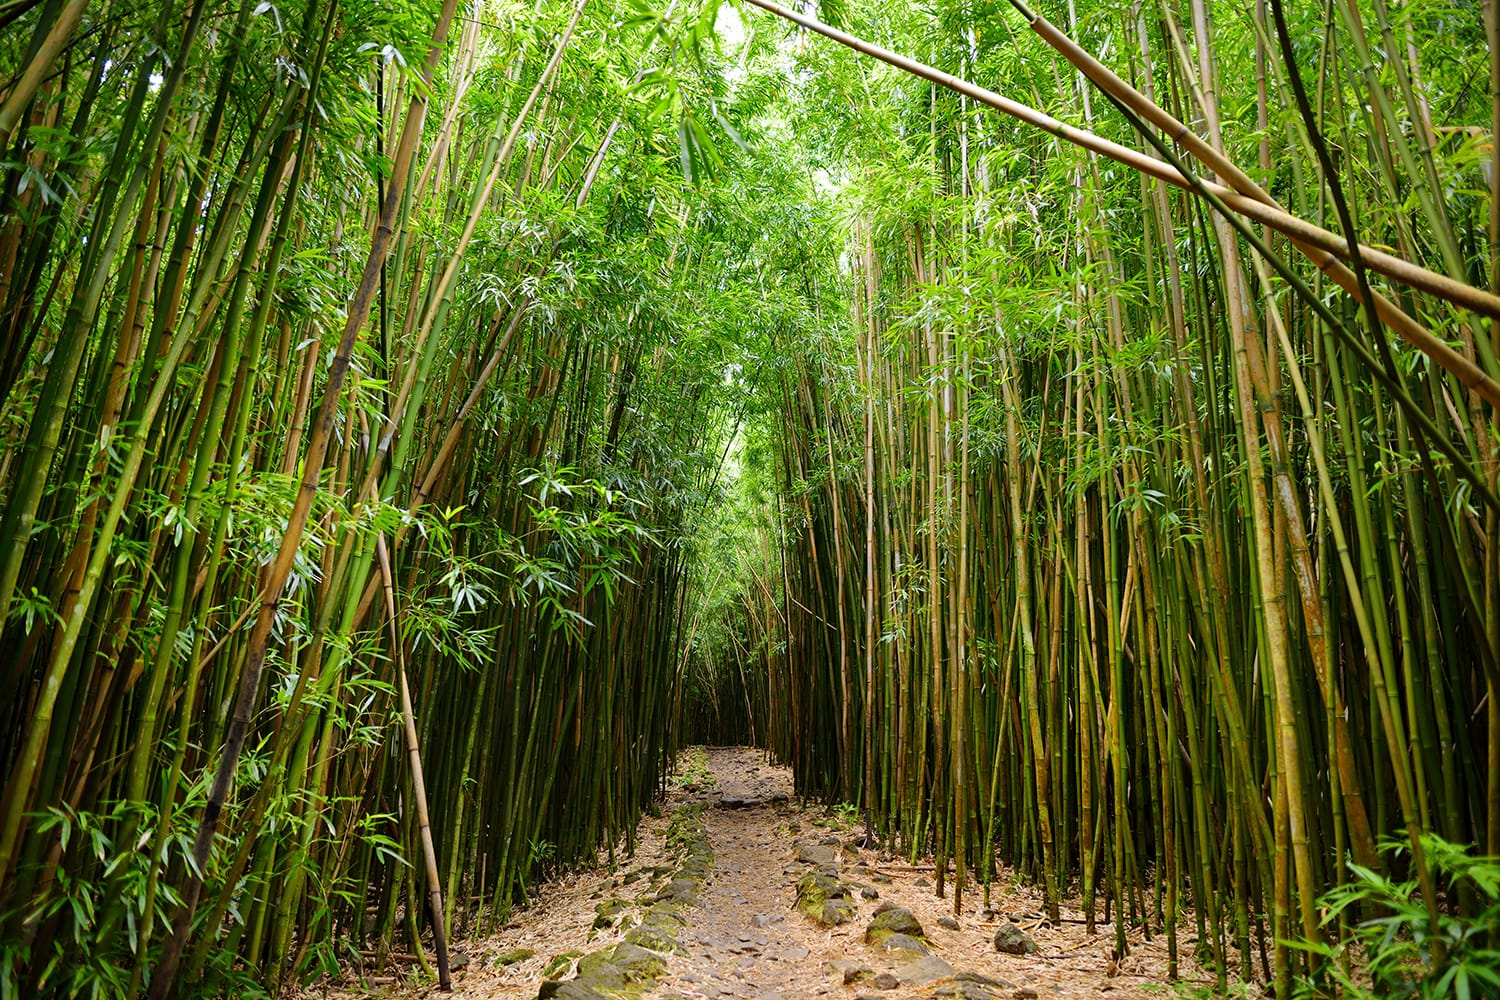 Path through dense bamboo forest, leading to famous Waimoku Falls. Popular Pipiwai trail in Haleakala National Park on Maui, Hawaii, USA